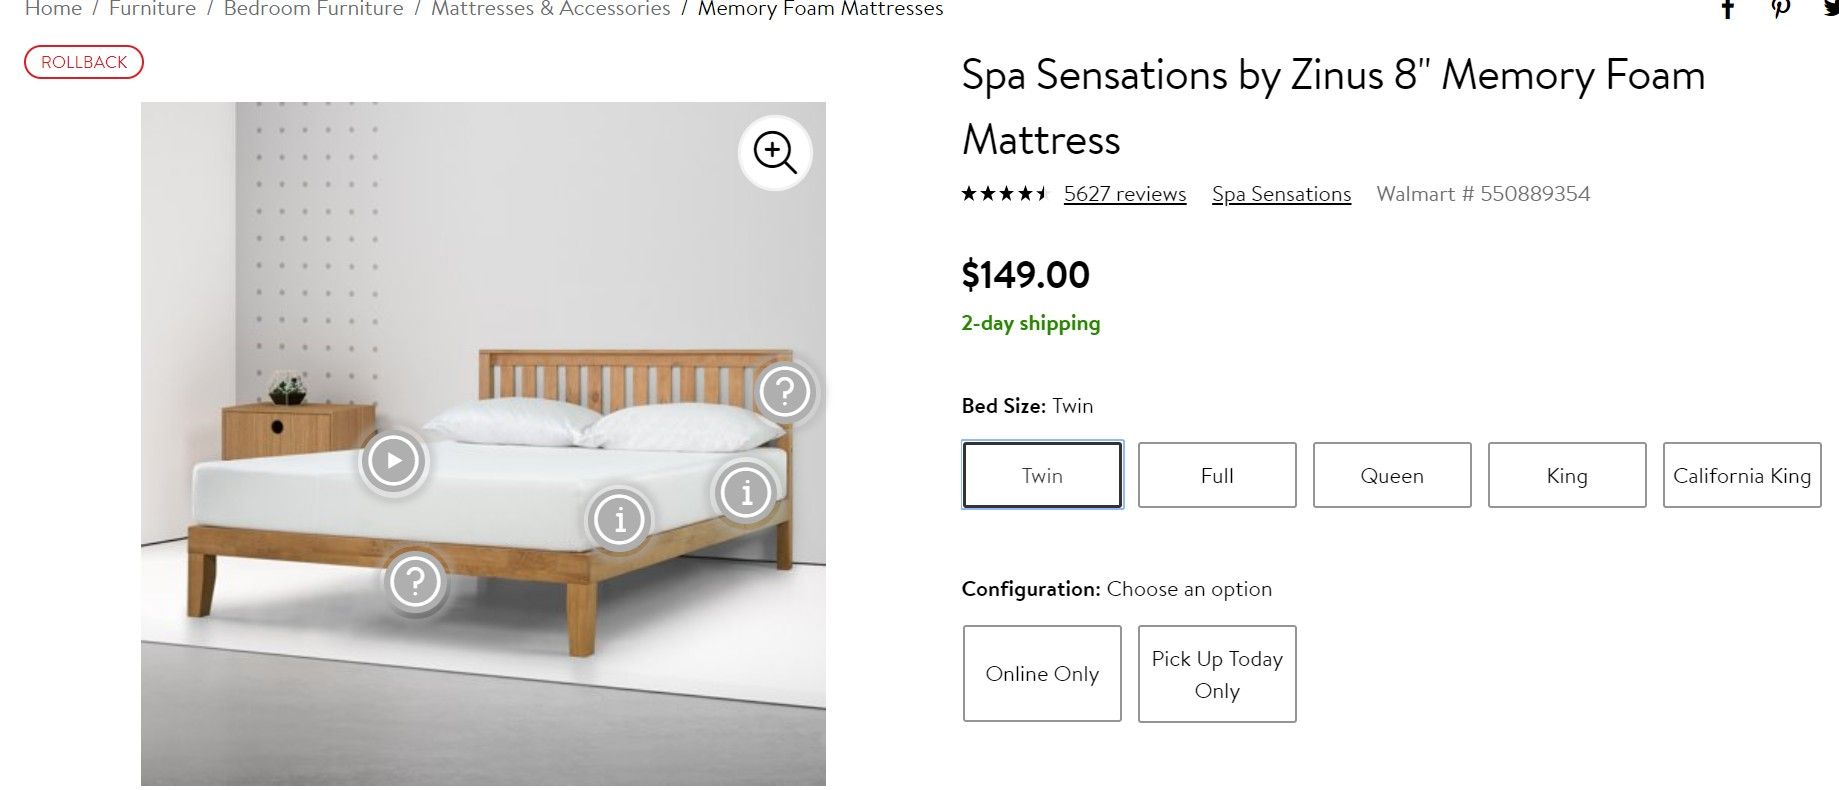 Spa Sensations by Zinus 8" Memory Foam Mattress and Ikea Malm twin bed frame